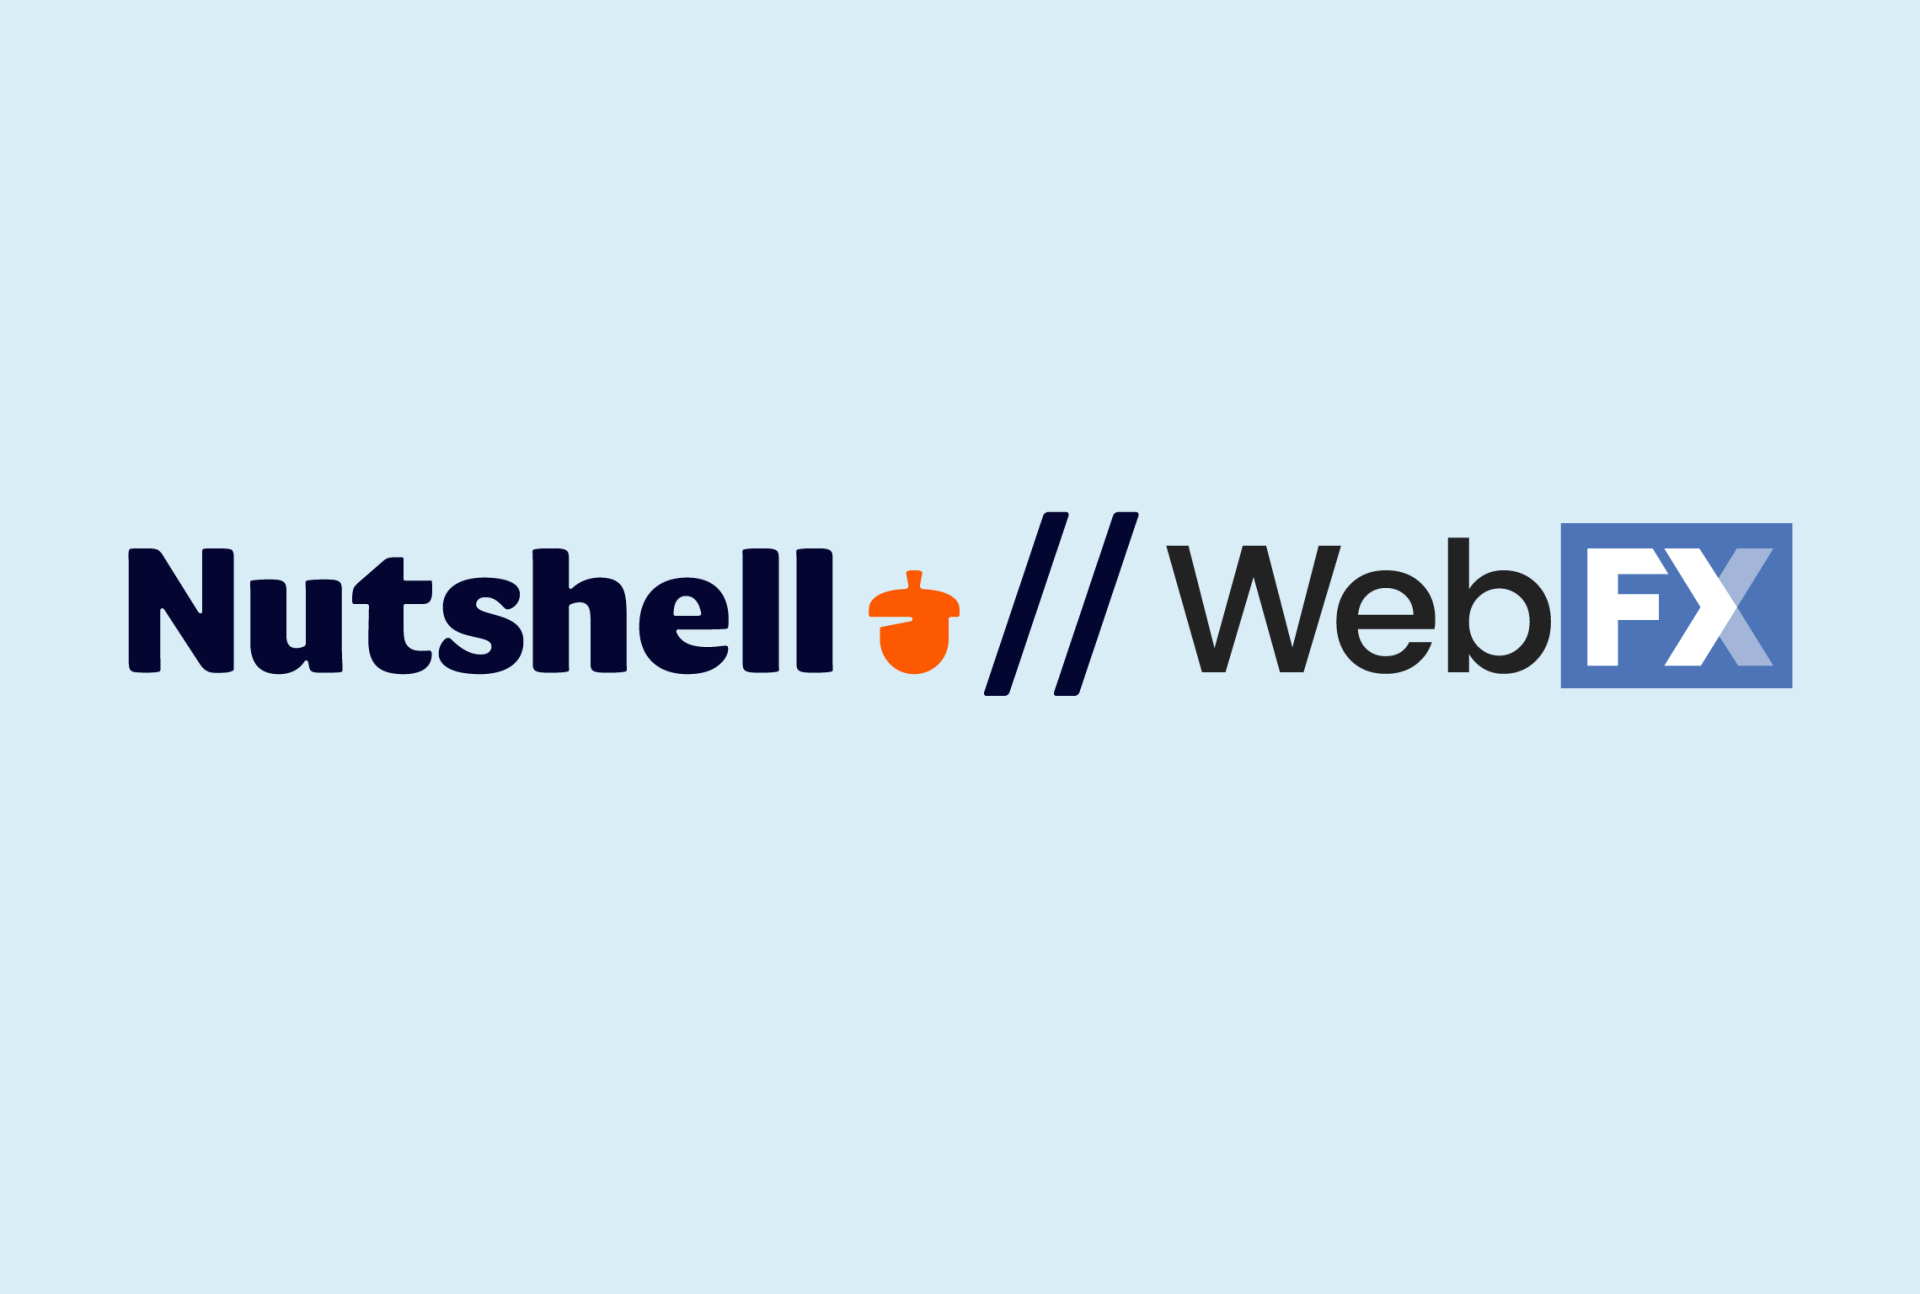 Nutshell and WebFX logos